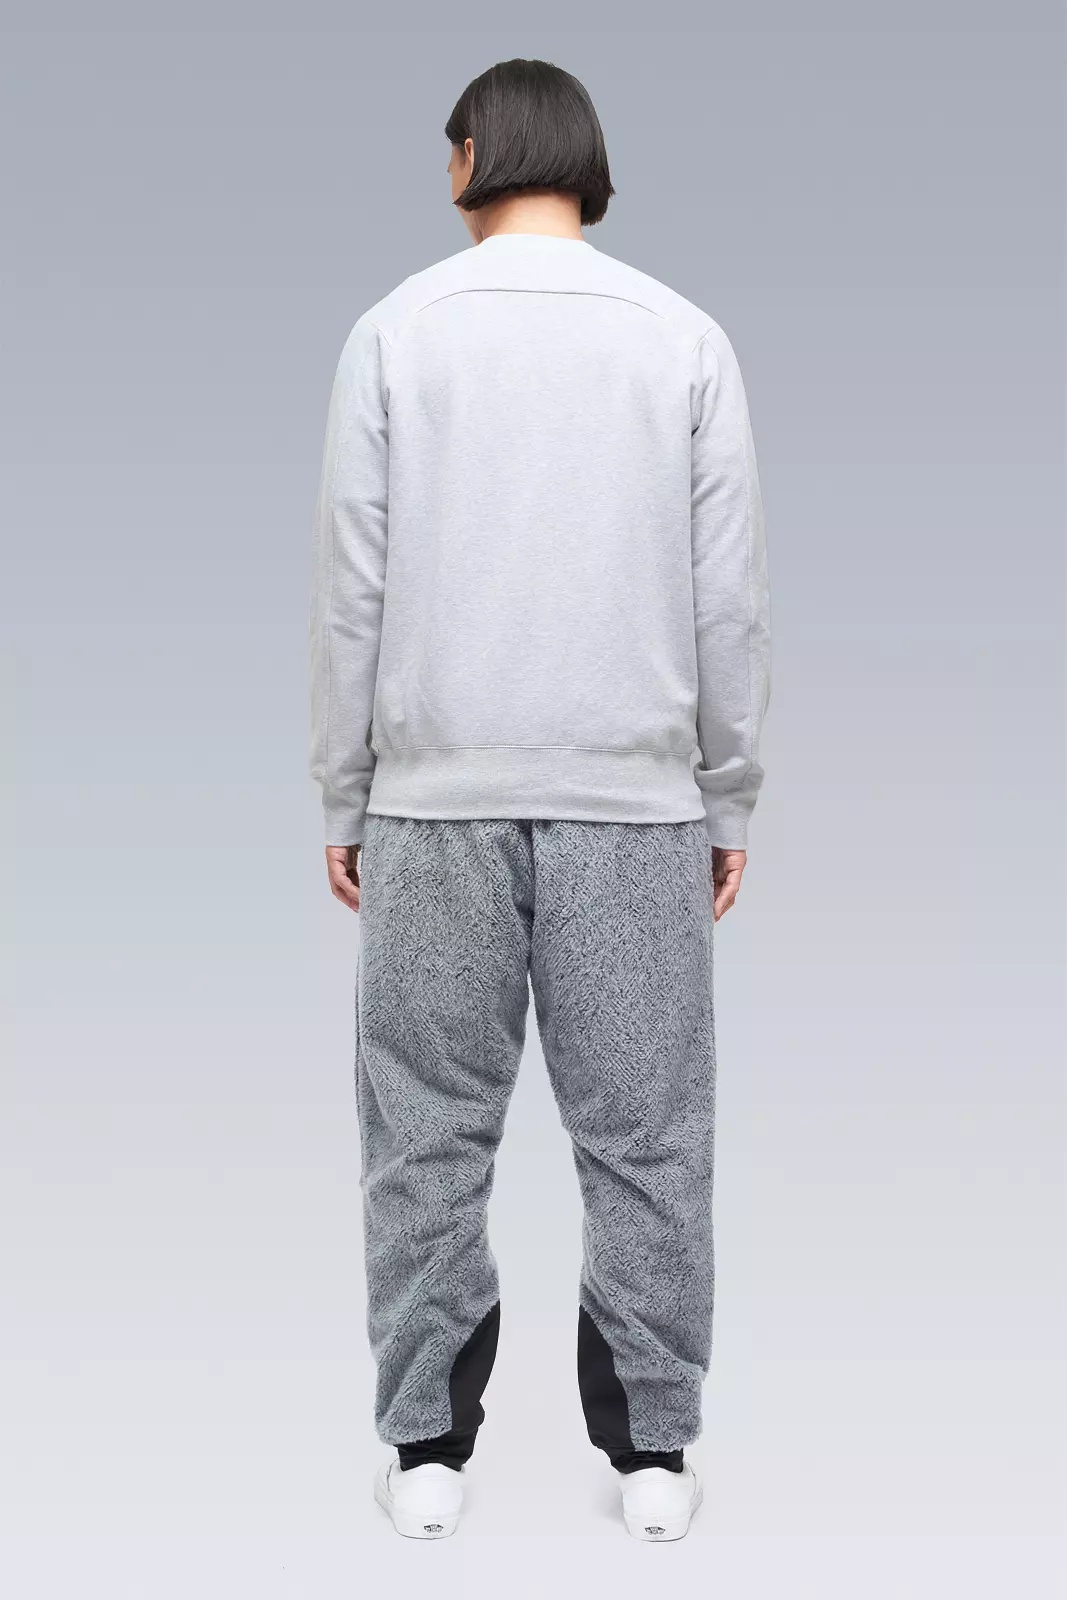 S14-BR Cotton Crewneck Sweatshirt Gray Melange - 4